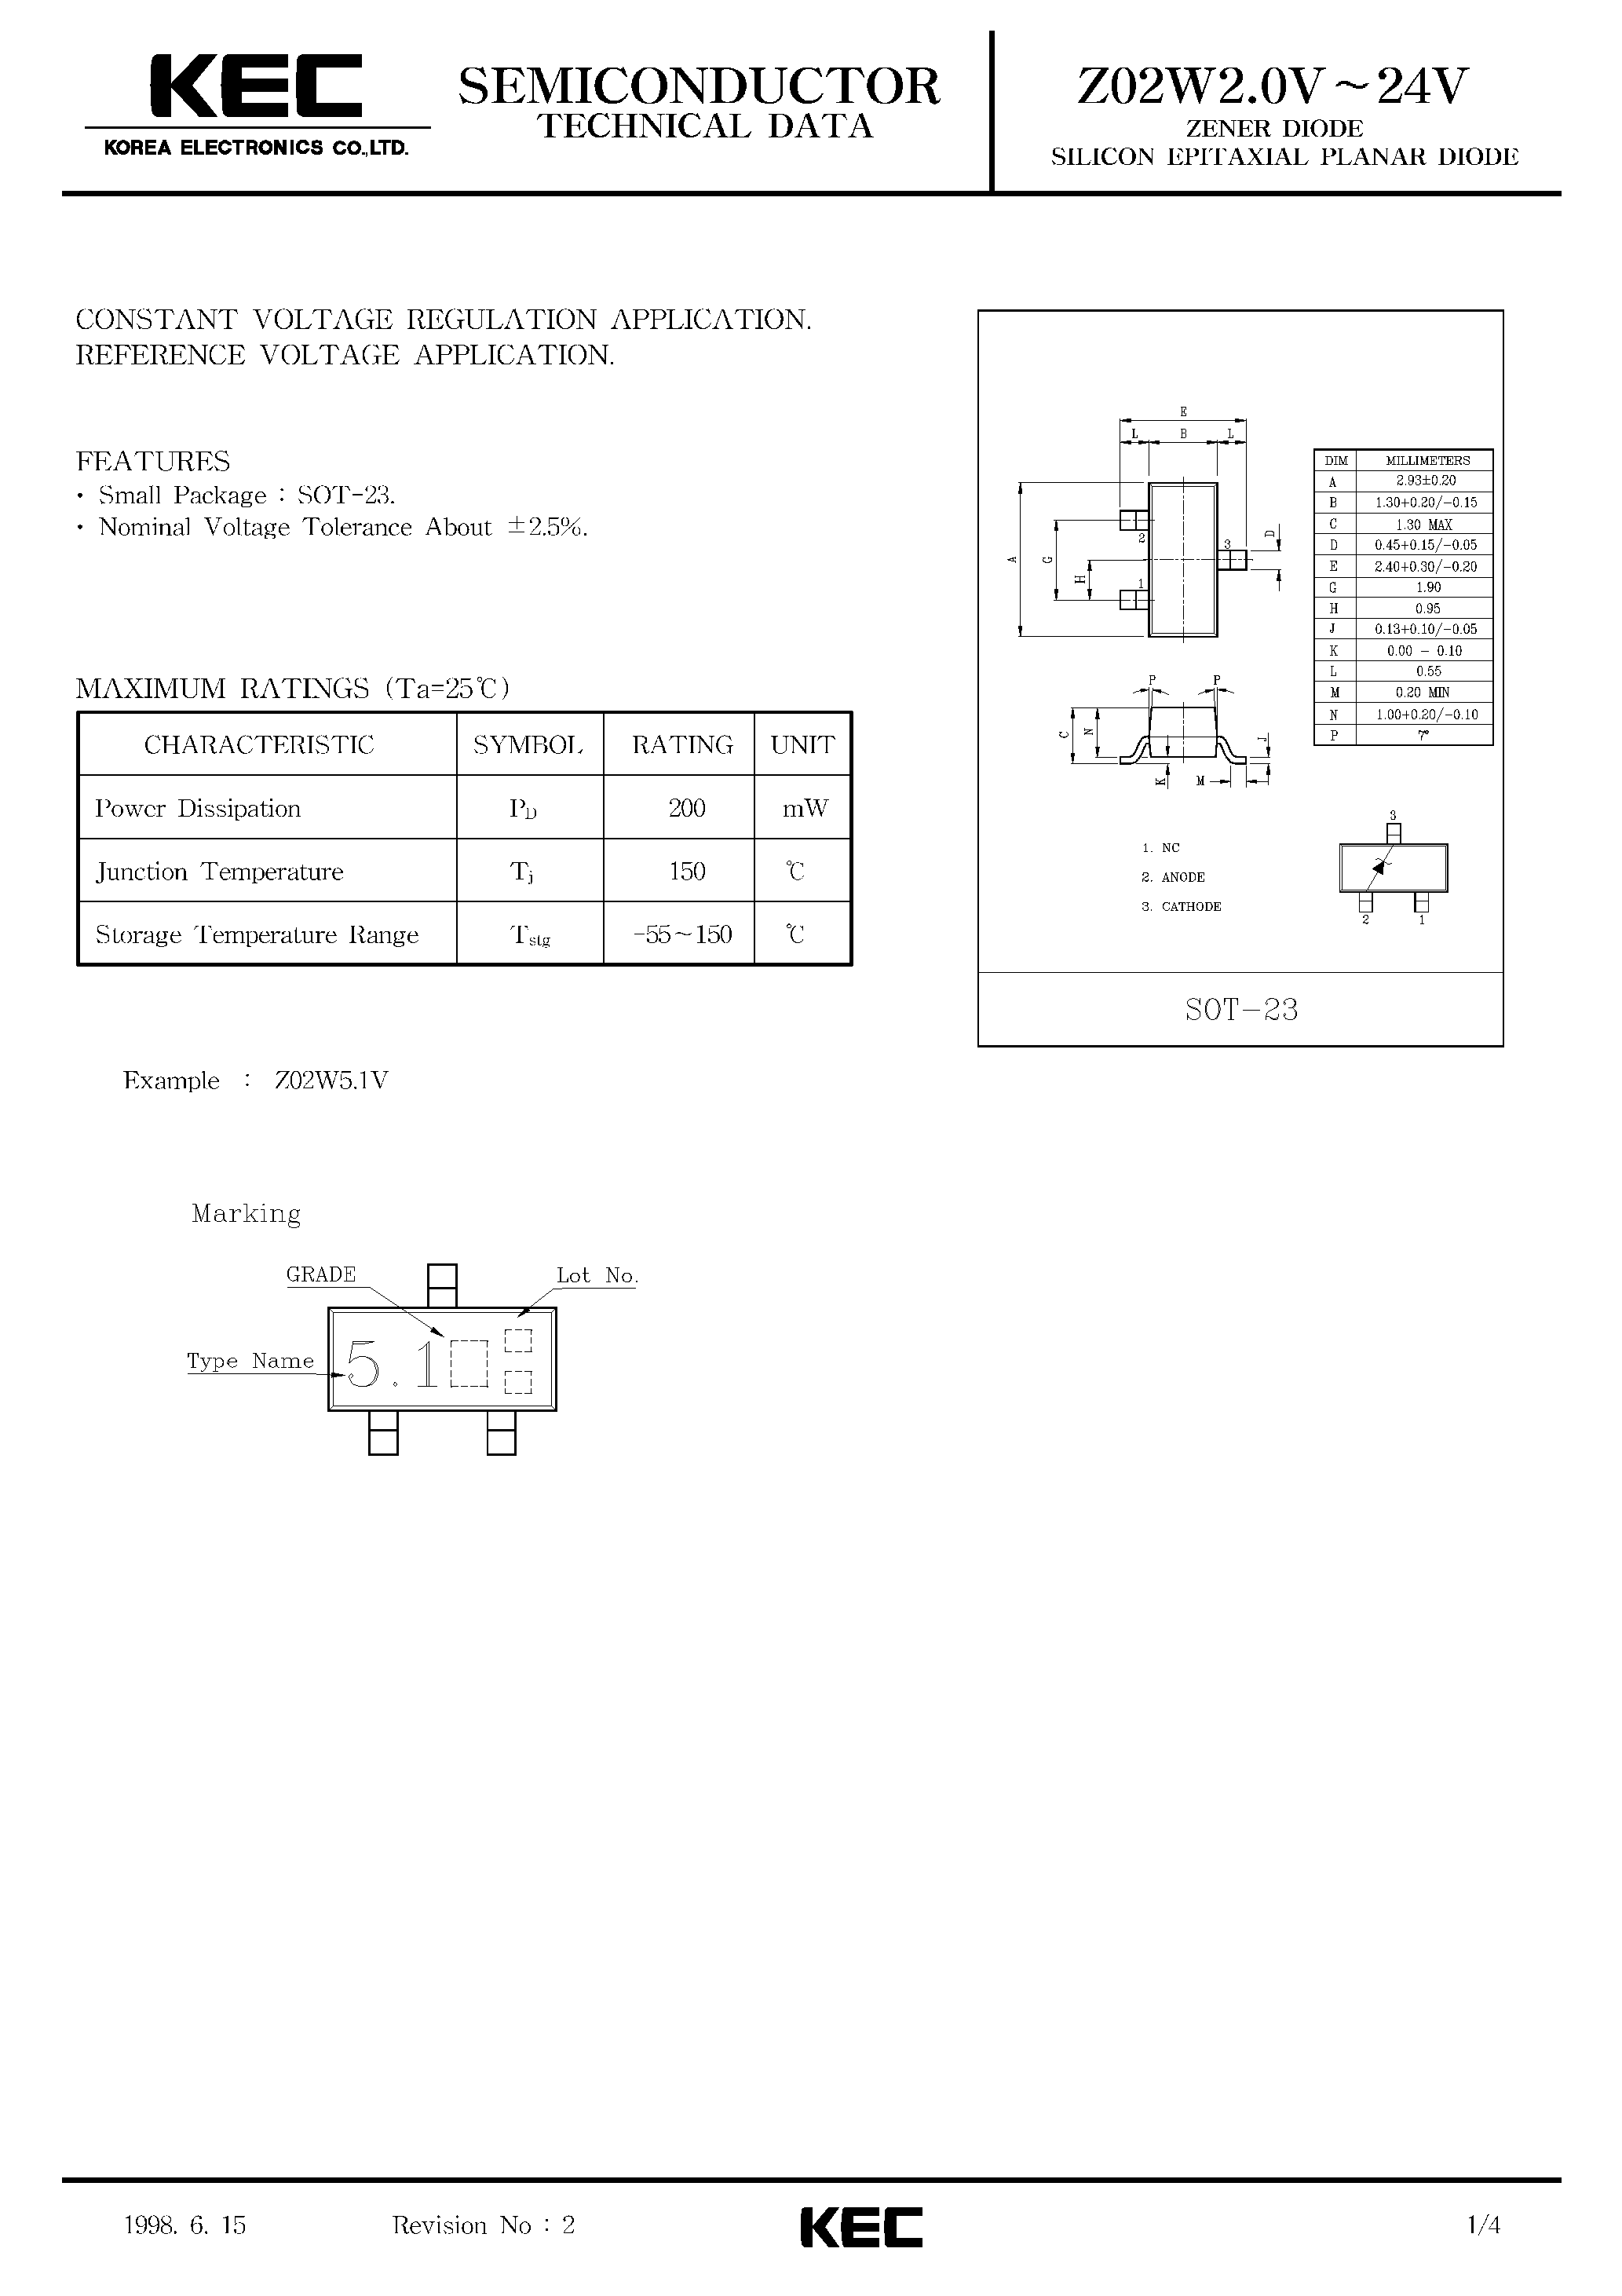 Datasheet Z02W33V - ZENER DIODE SILICON EPITAXIAL PLANAR DIODE (CONSTANT VOLTAGE REGULATION/ REFERENCE VOLTAGE) page 1